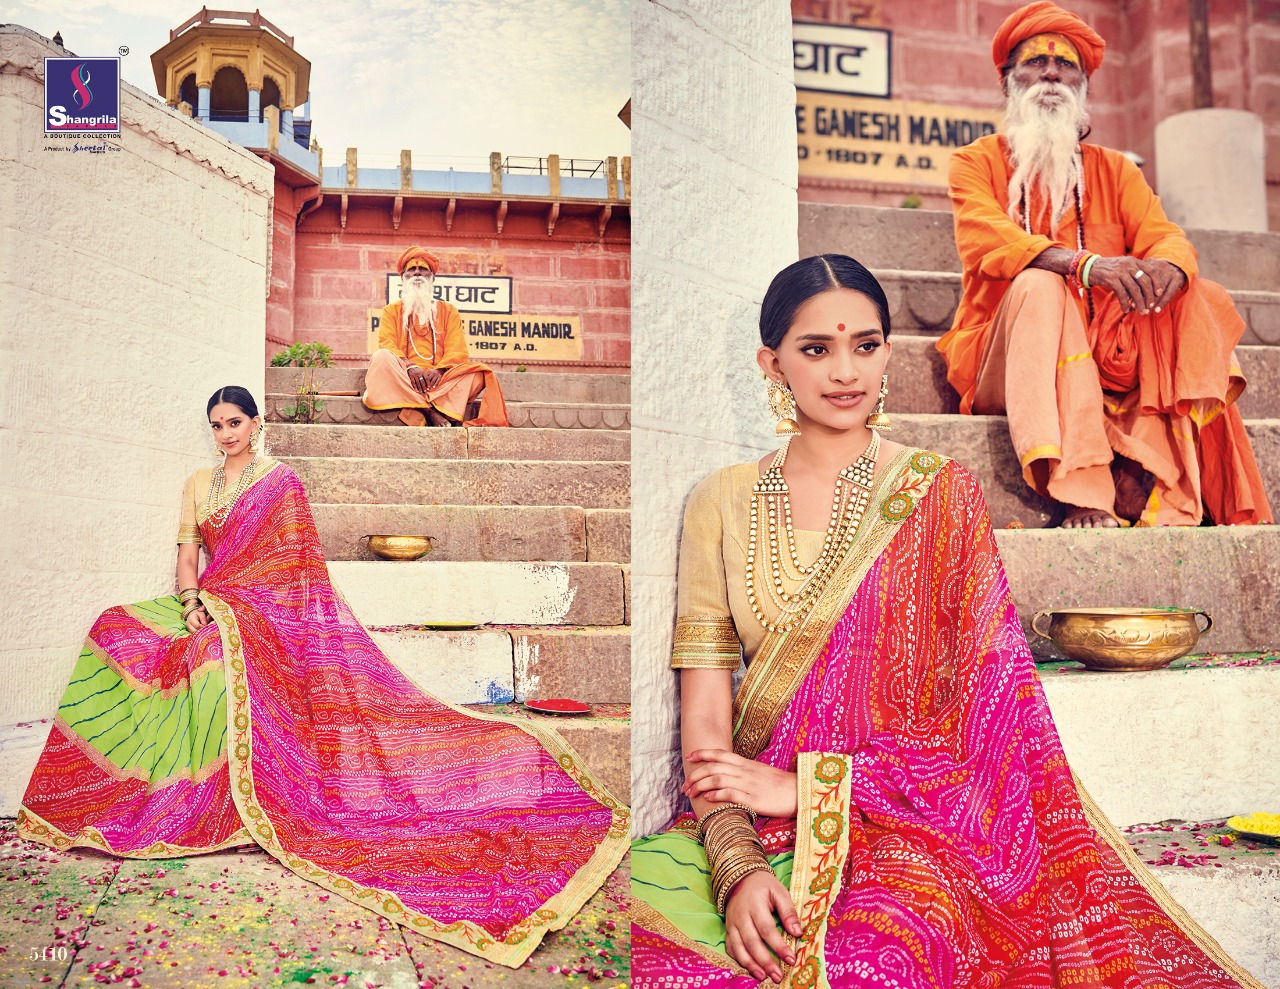 Shangrila launching lehariyaa most elegant collection of sarees